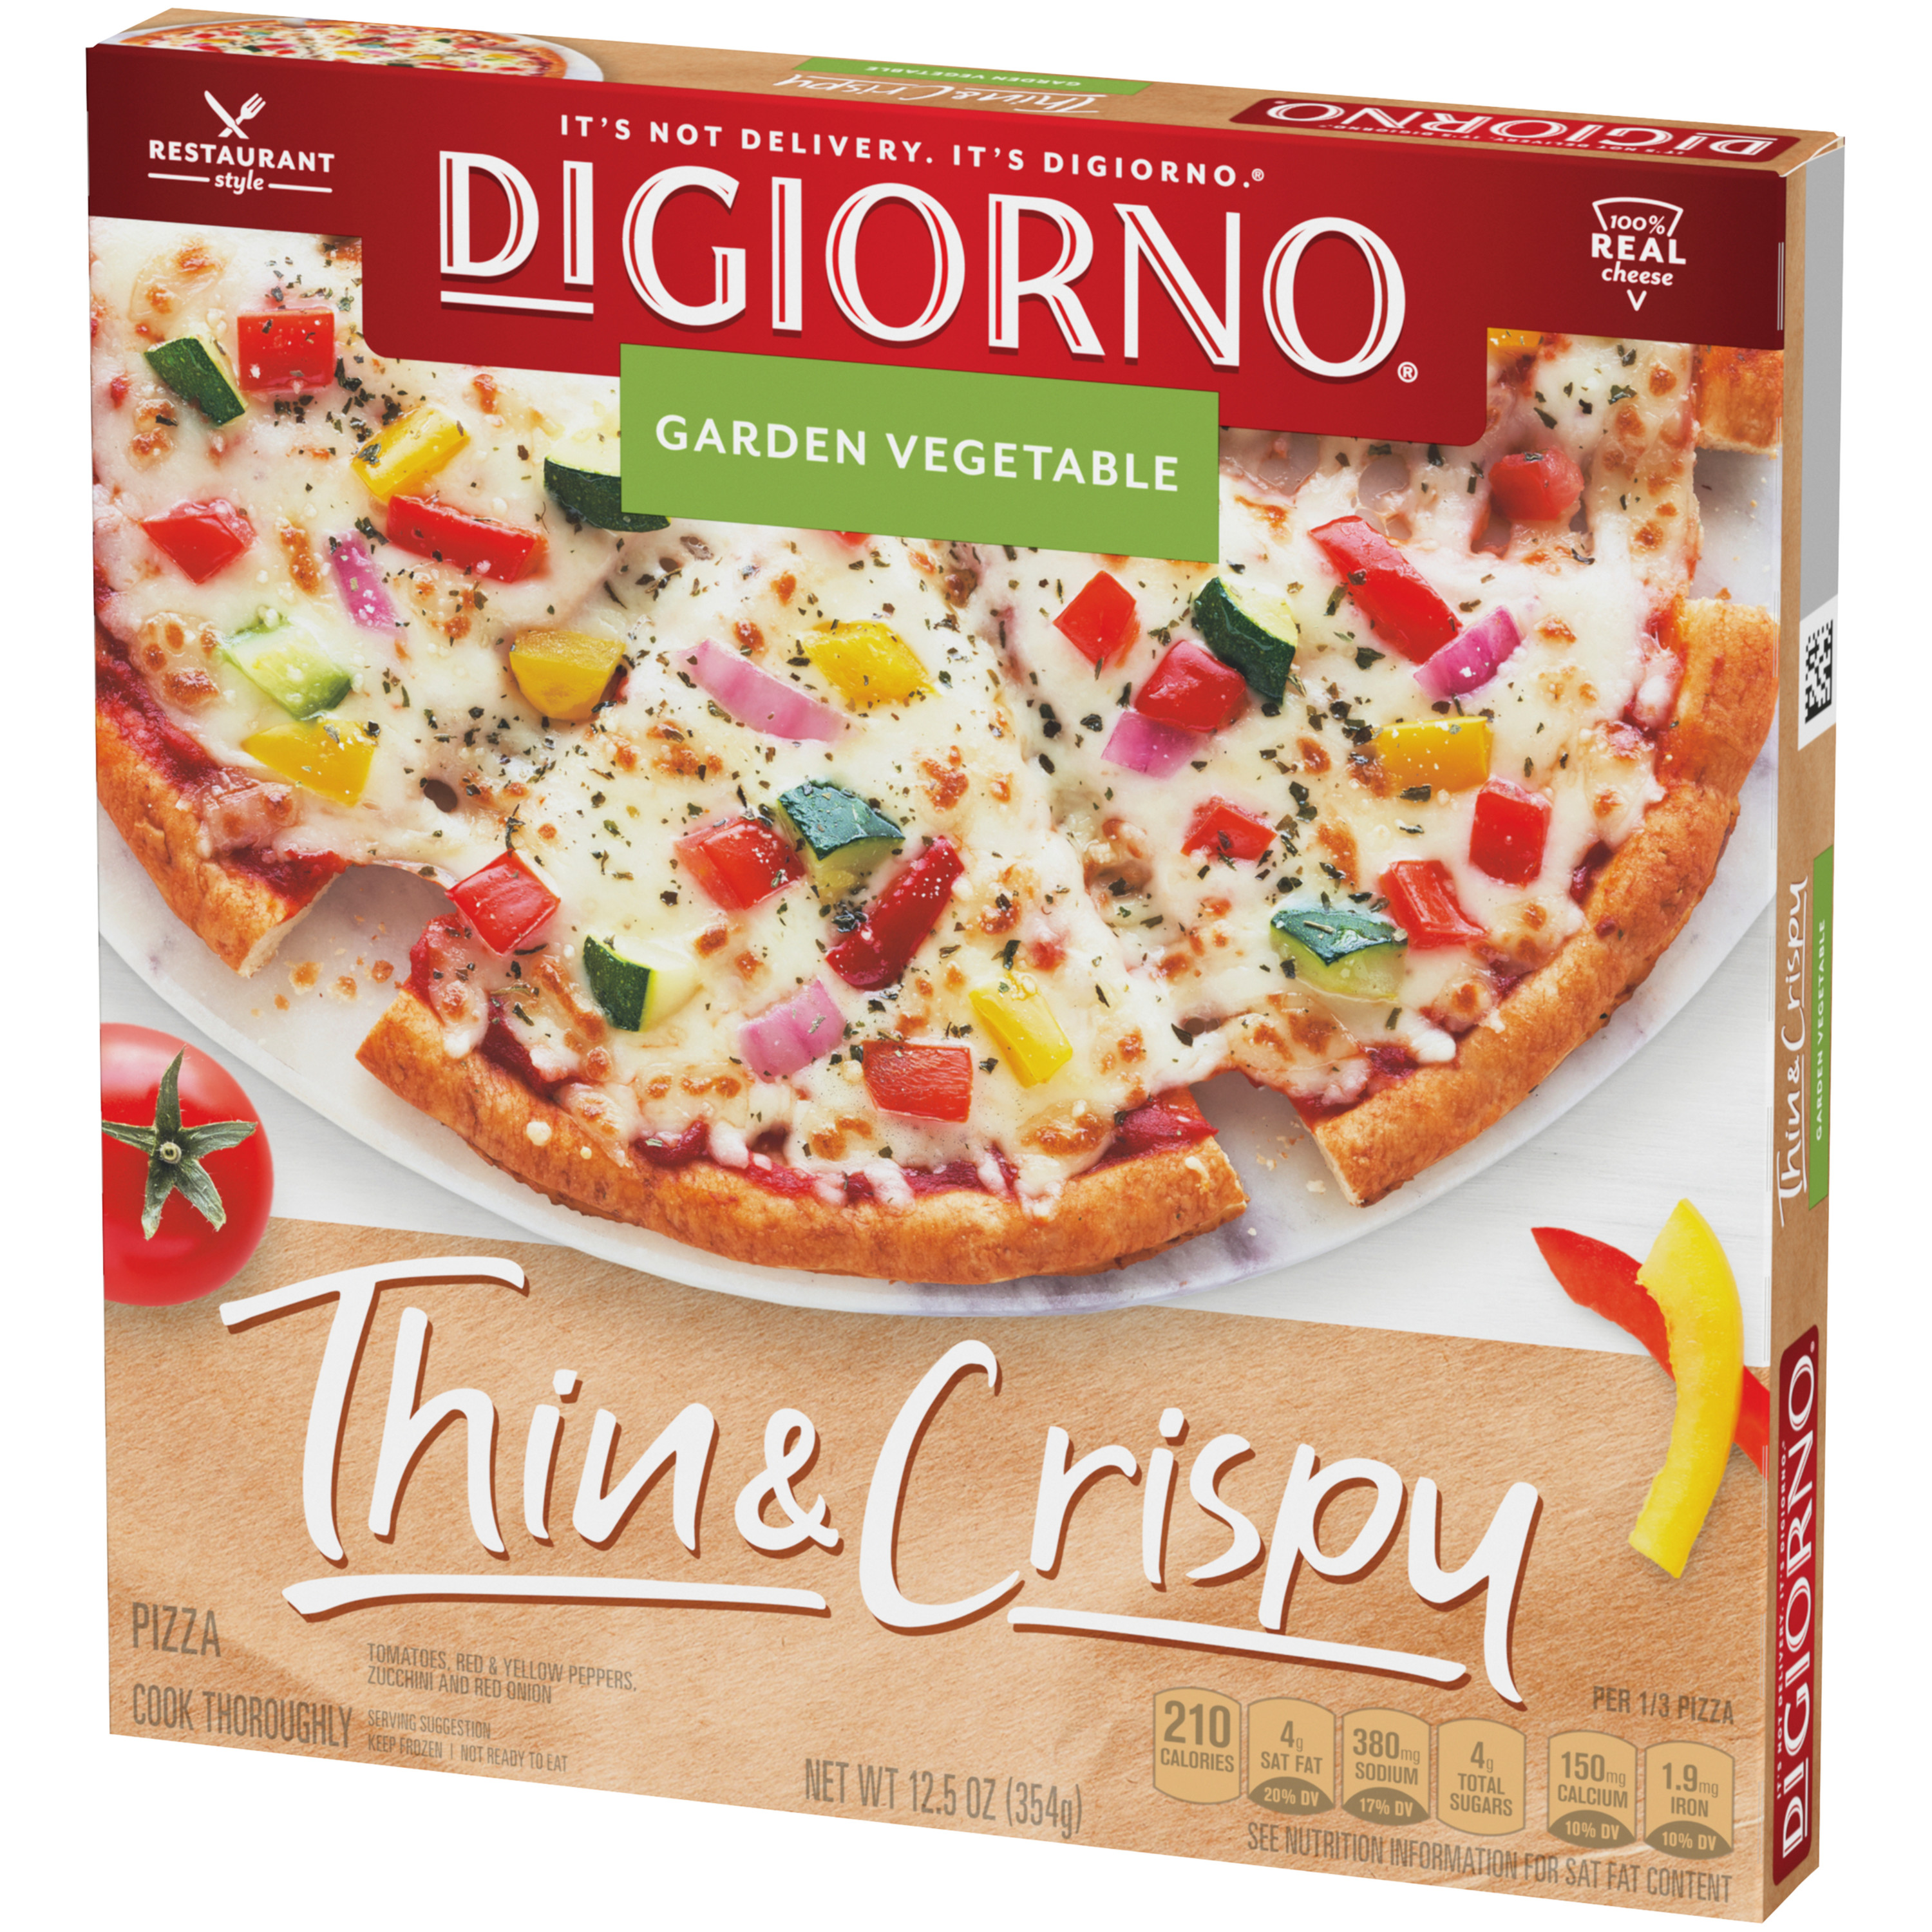 DIGIORNO Thin & Crispy Garden Vegetable Frozen Pizza - image 3 of 13